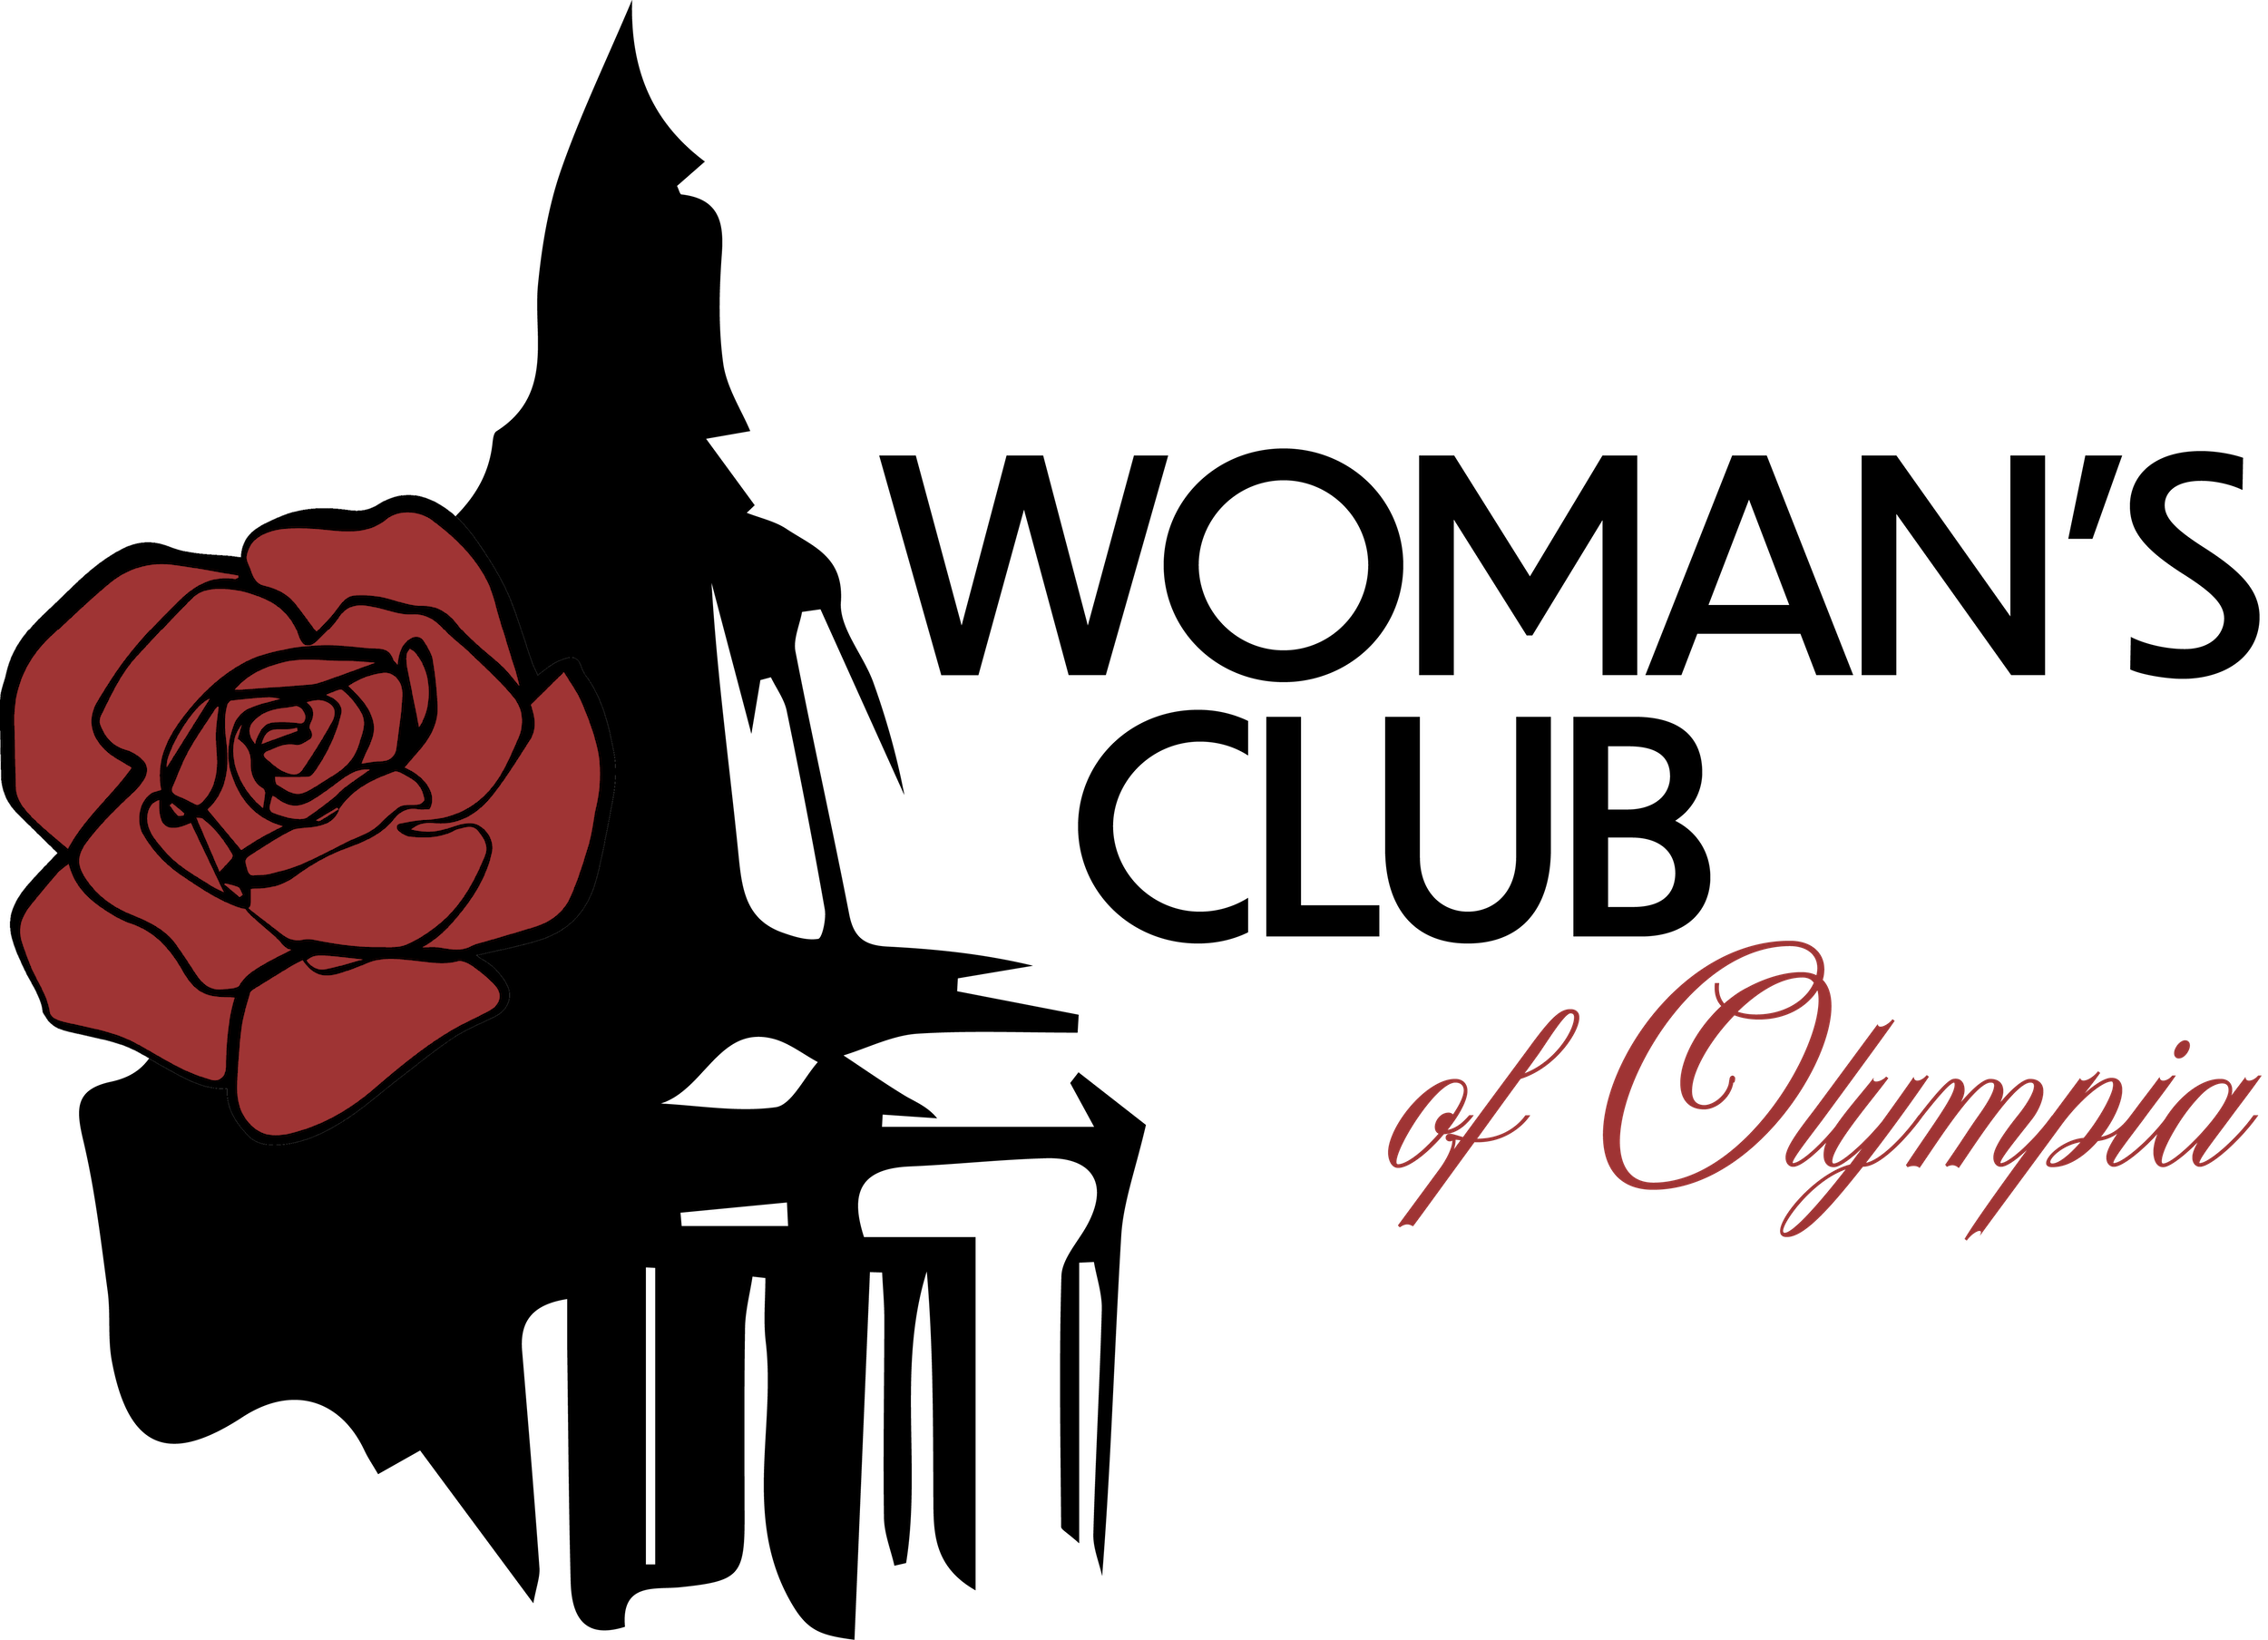 Woman's Club of Olympia logo